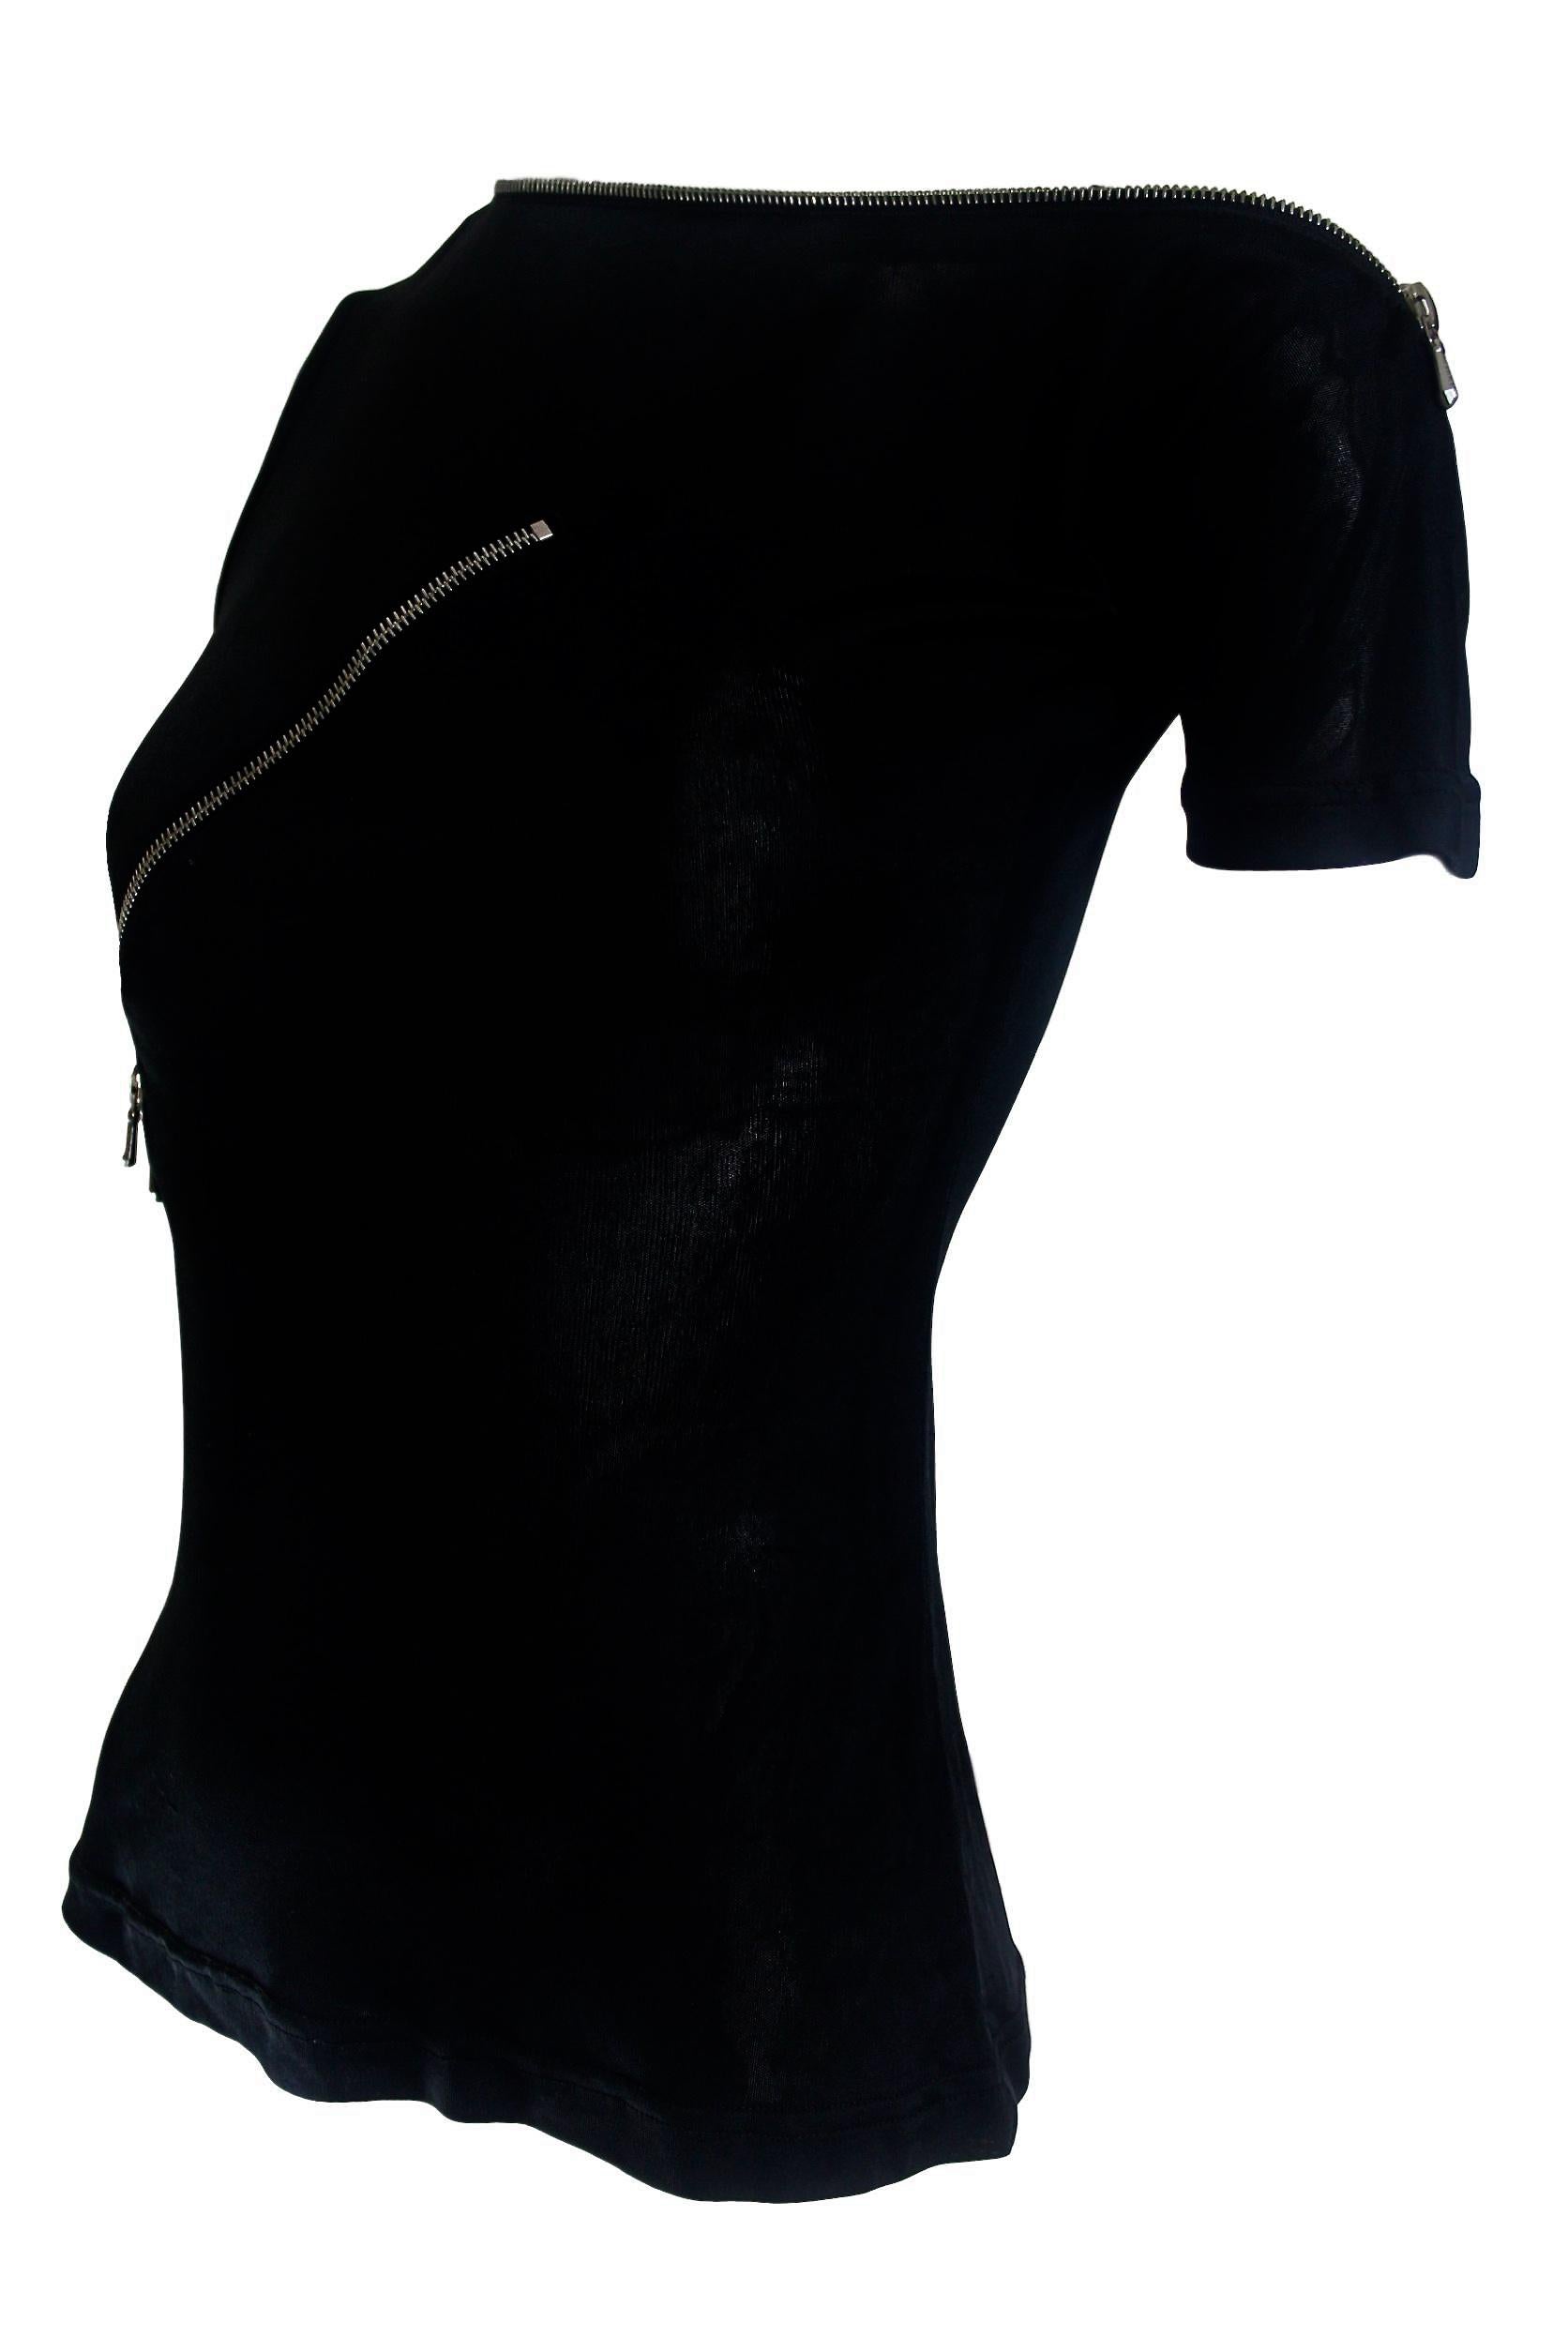 Alexander McQueen Zipper T-Shirt Spring/Summer 1997 Show In Good Condition For Sale In Bath, GB